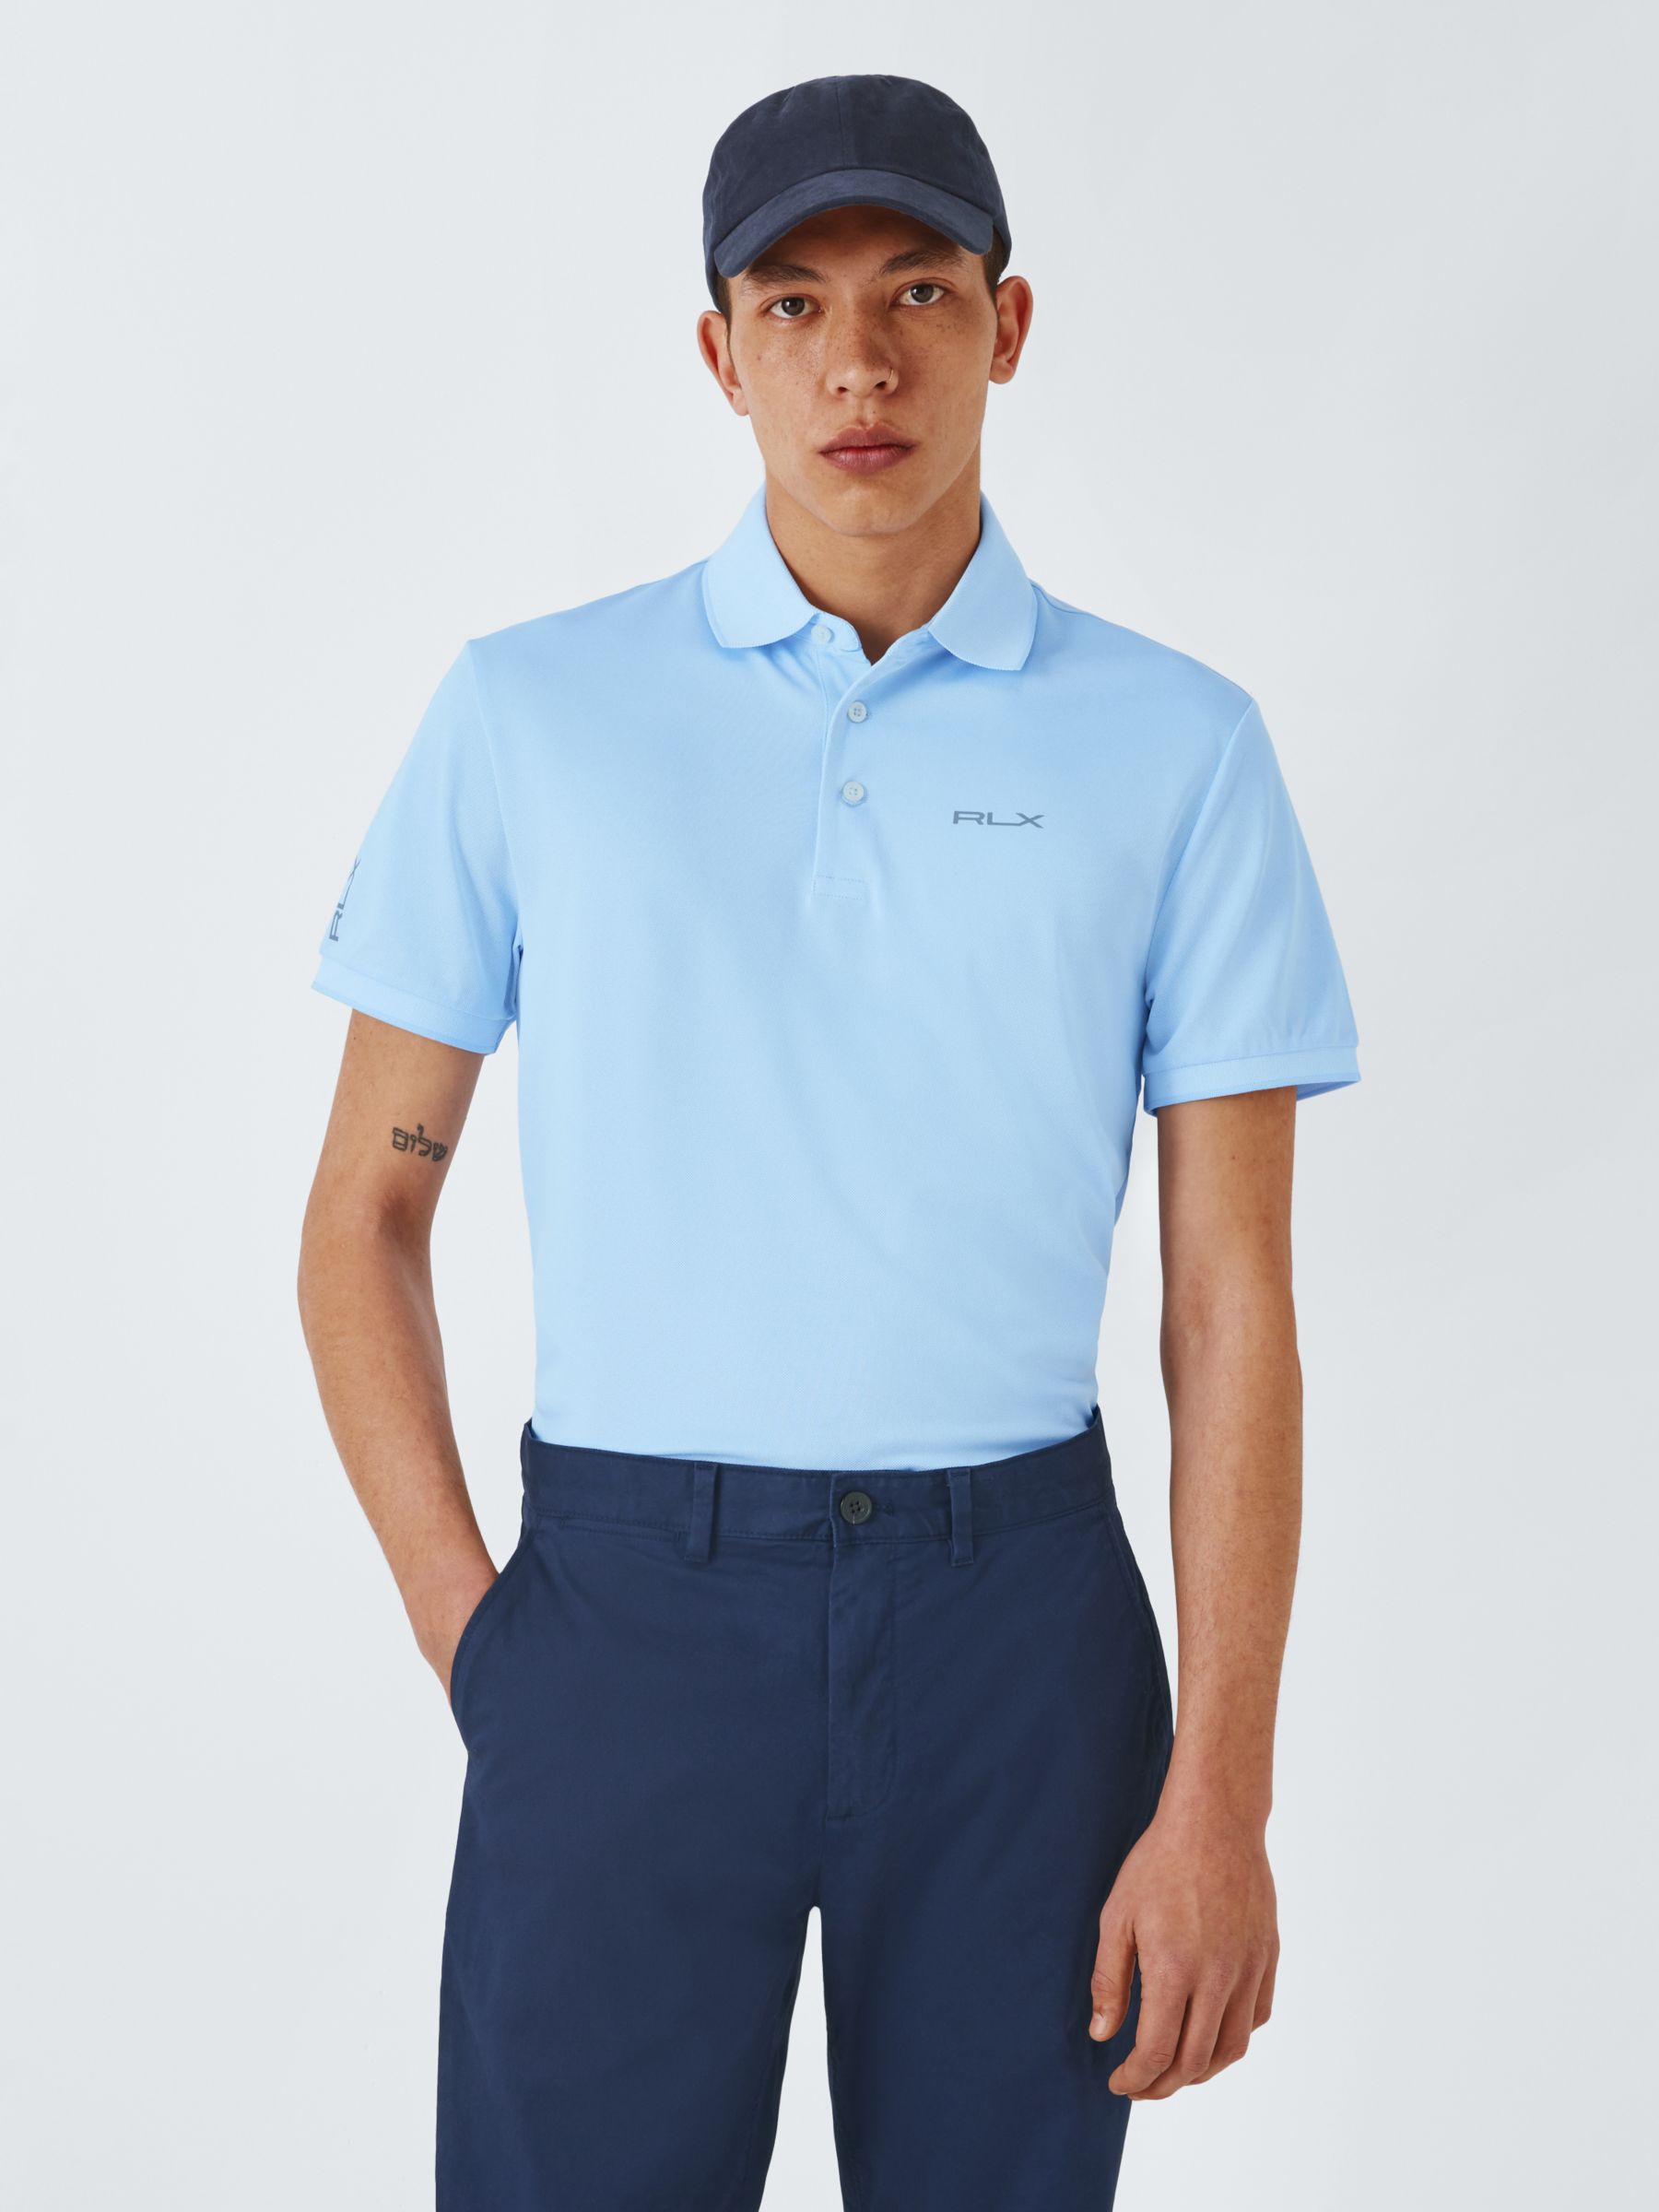 Ralph Lauren Tailored Fit Performance Polo Shirt, Office Blue, S